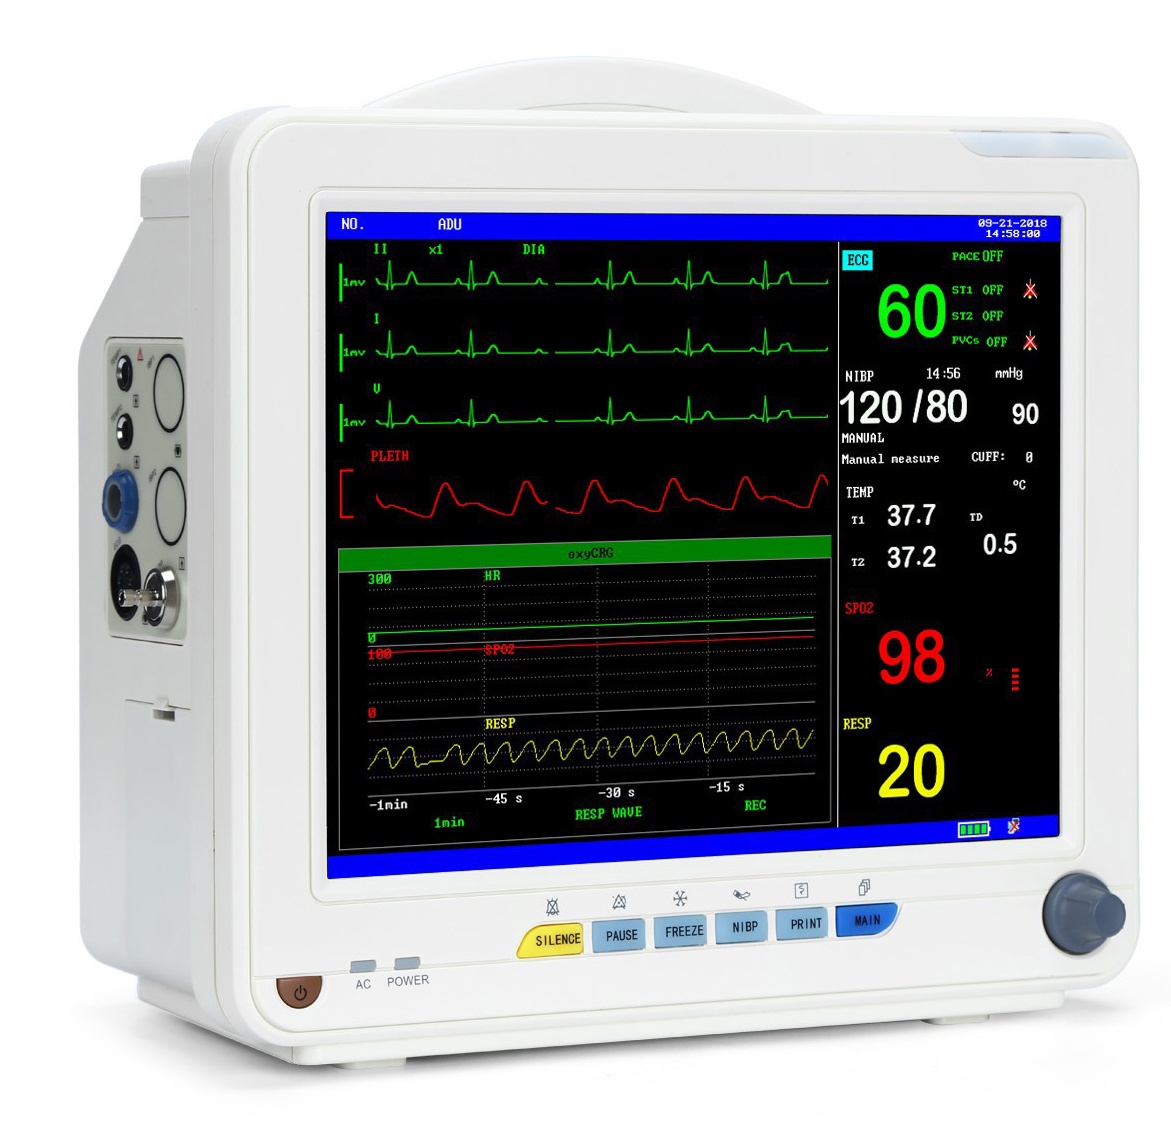 Multi-function heart monitor